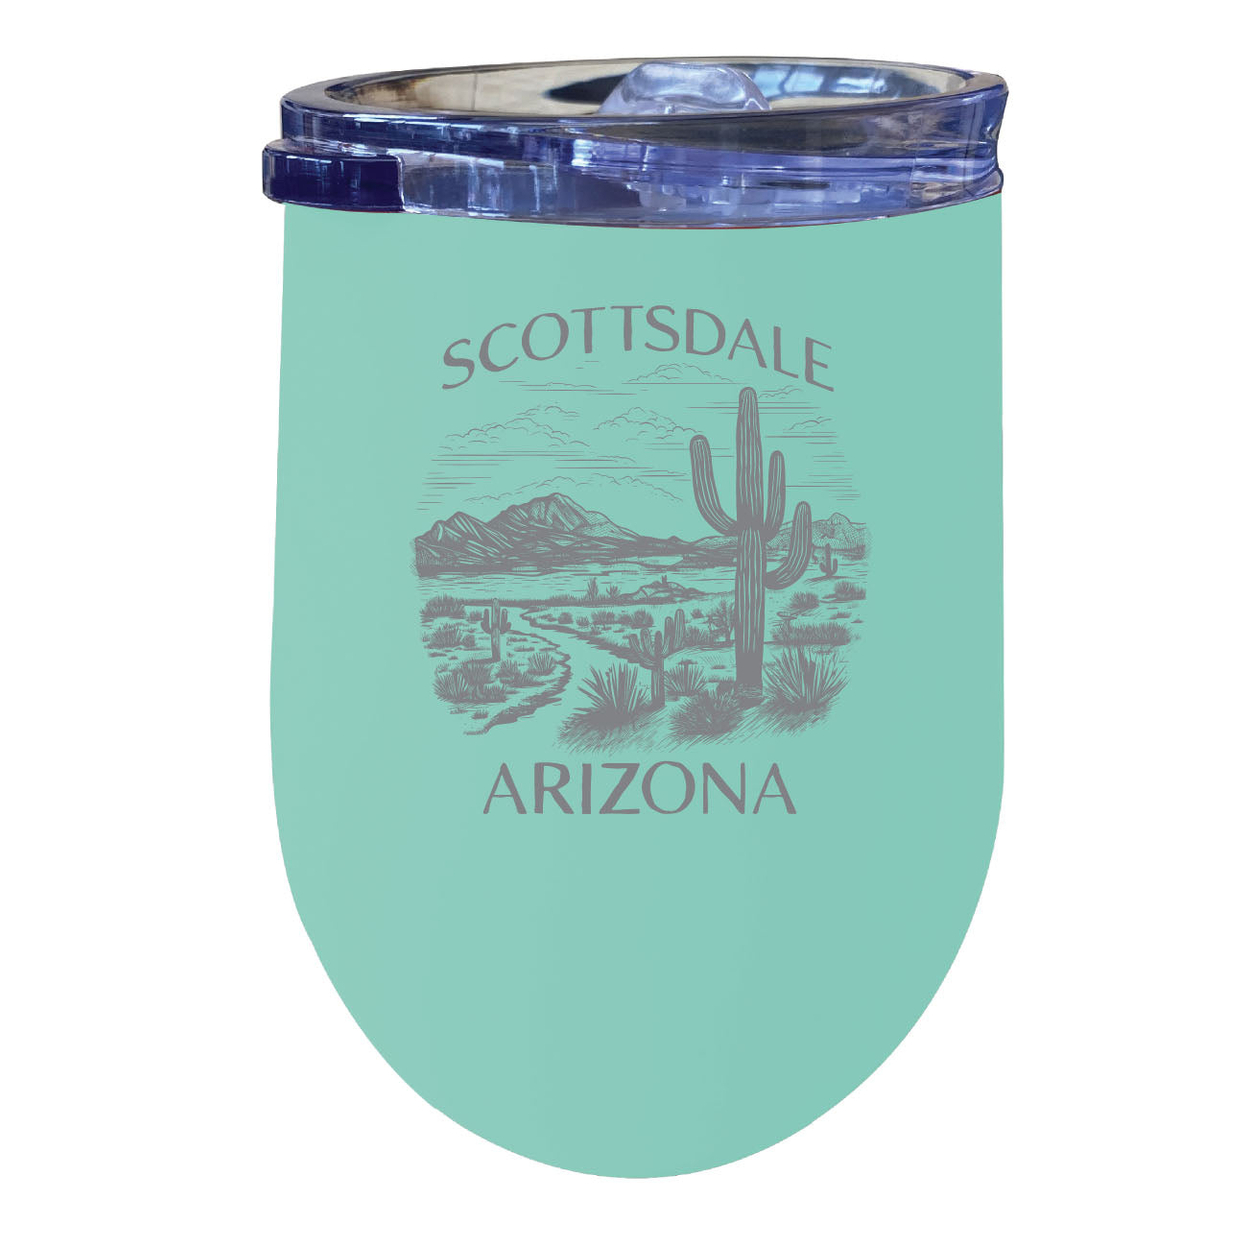 Scottsdale Arizona Souvenir 12 Oz Engraved Insulated Wine Stainless Steel Tumbler - Rainbow Glitter Gray,,Single Unit